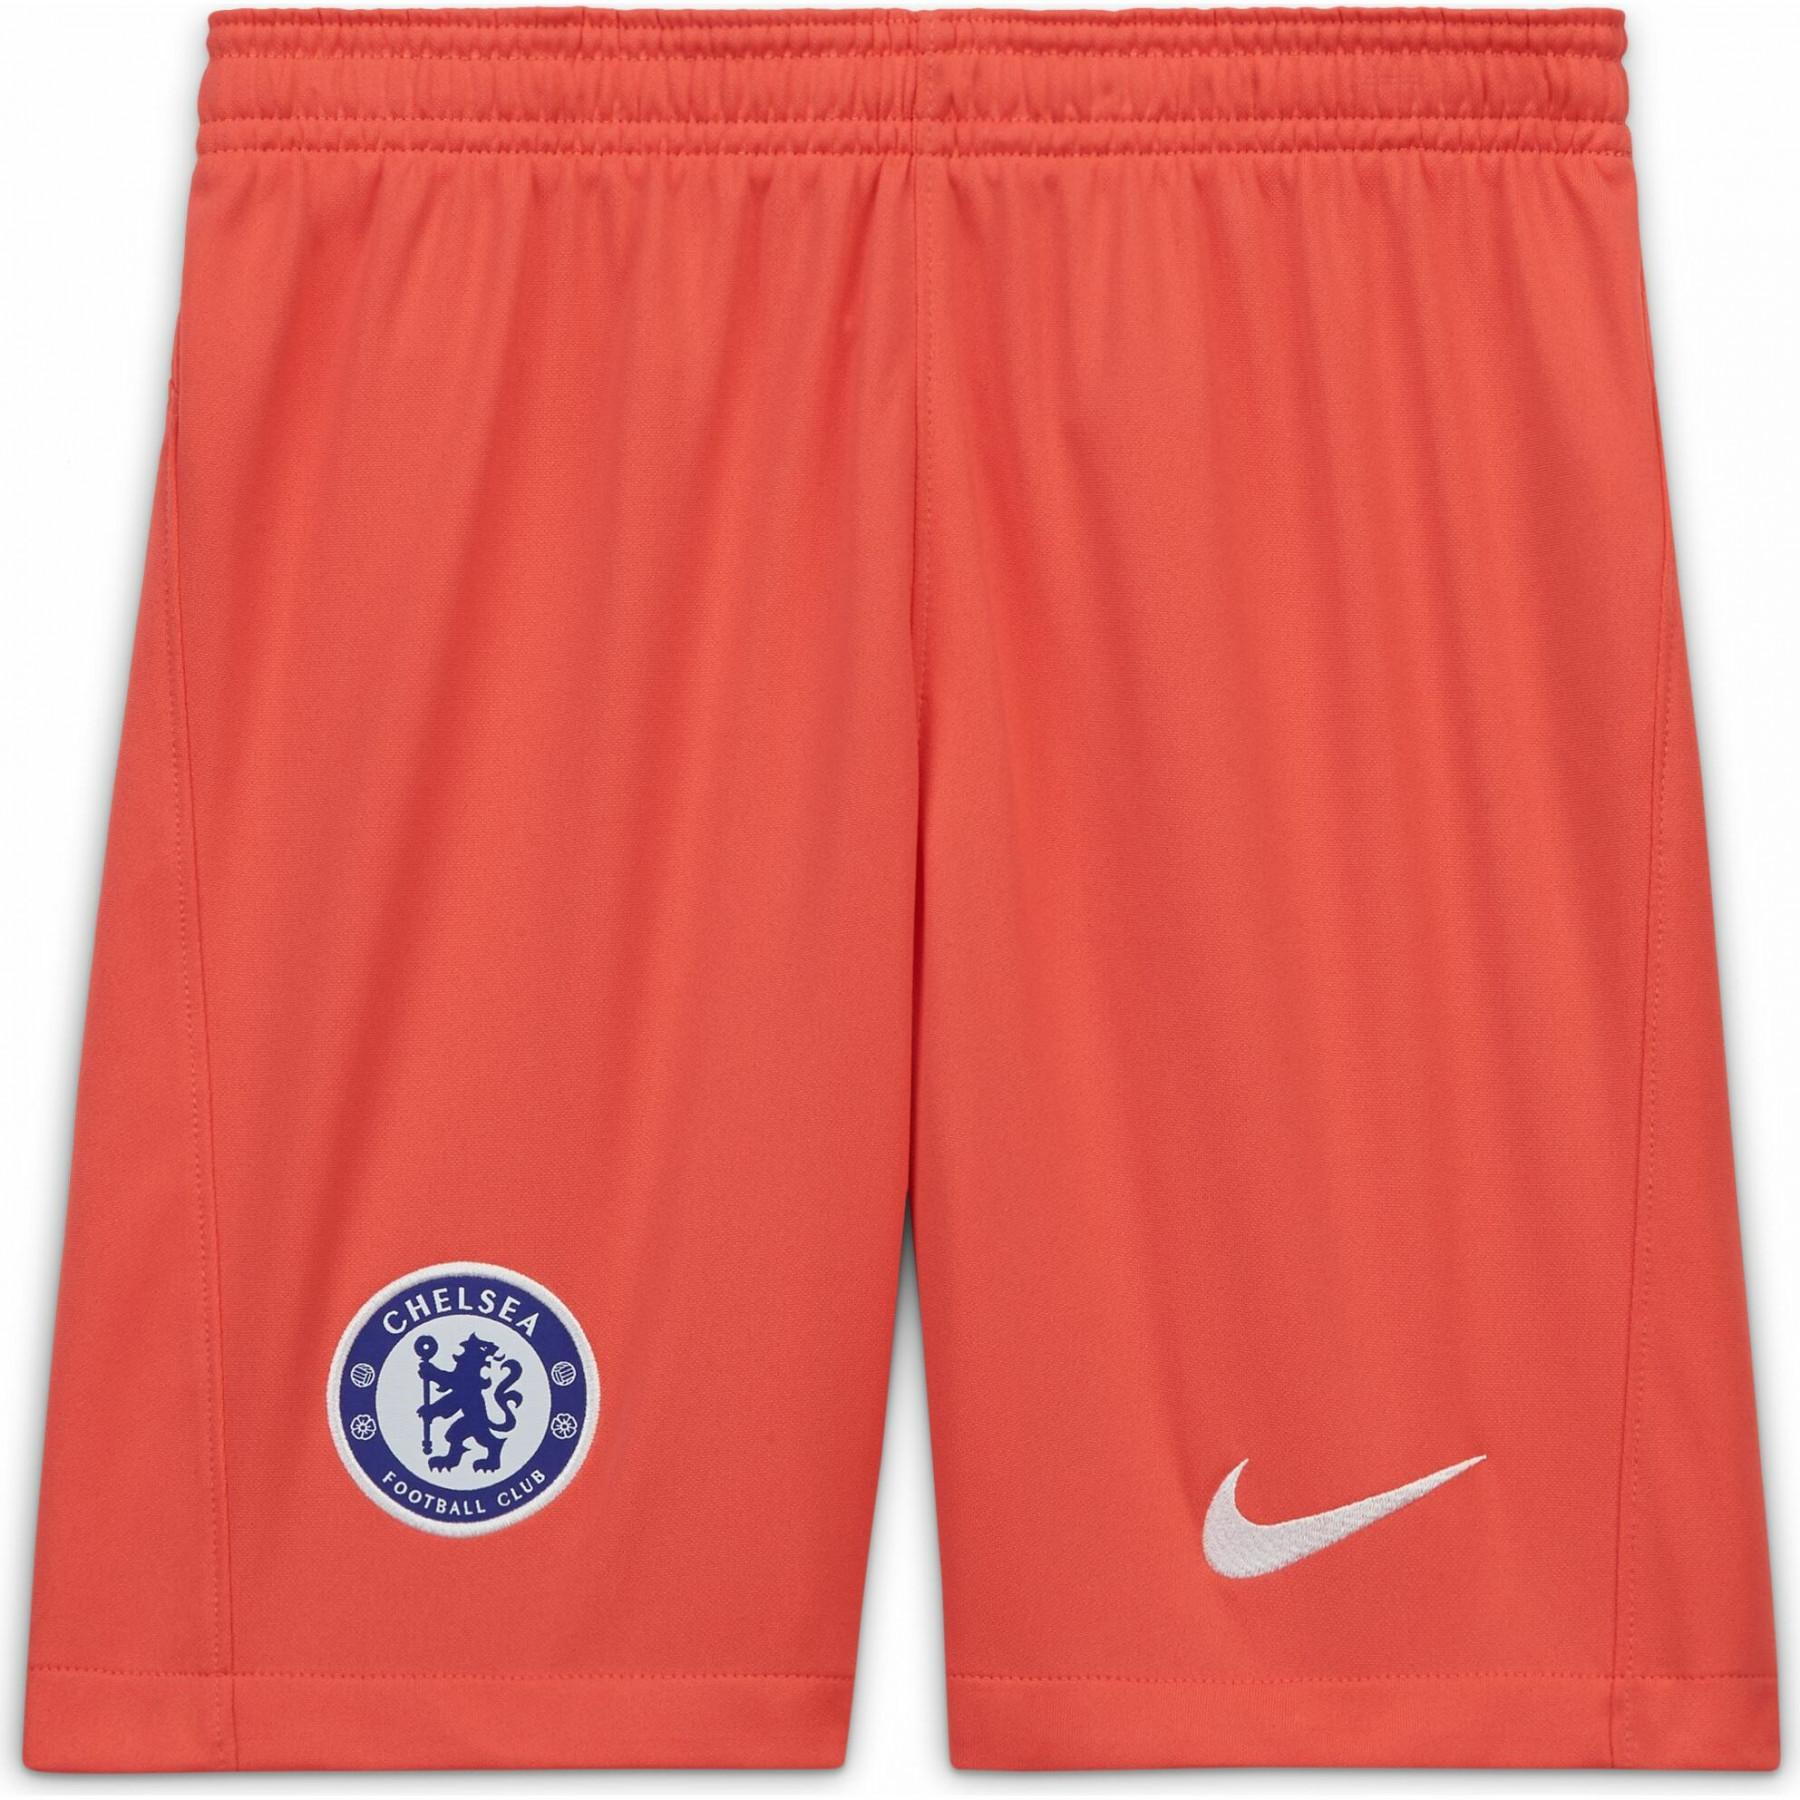 Children's shorts Chelsea Stadium 2020/21